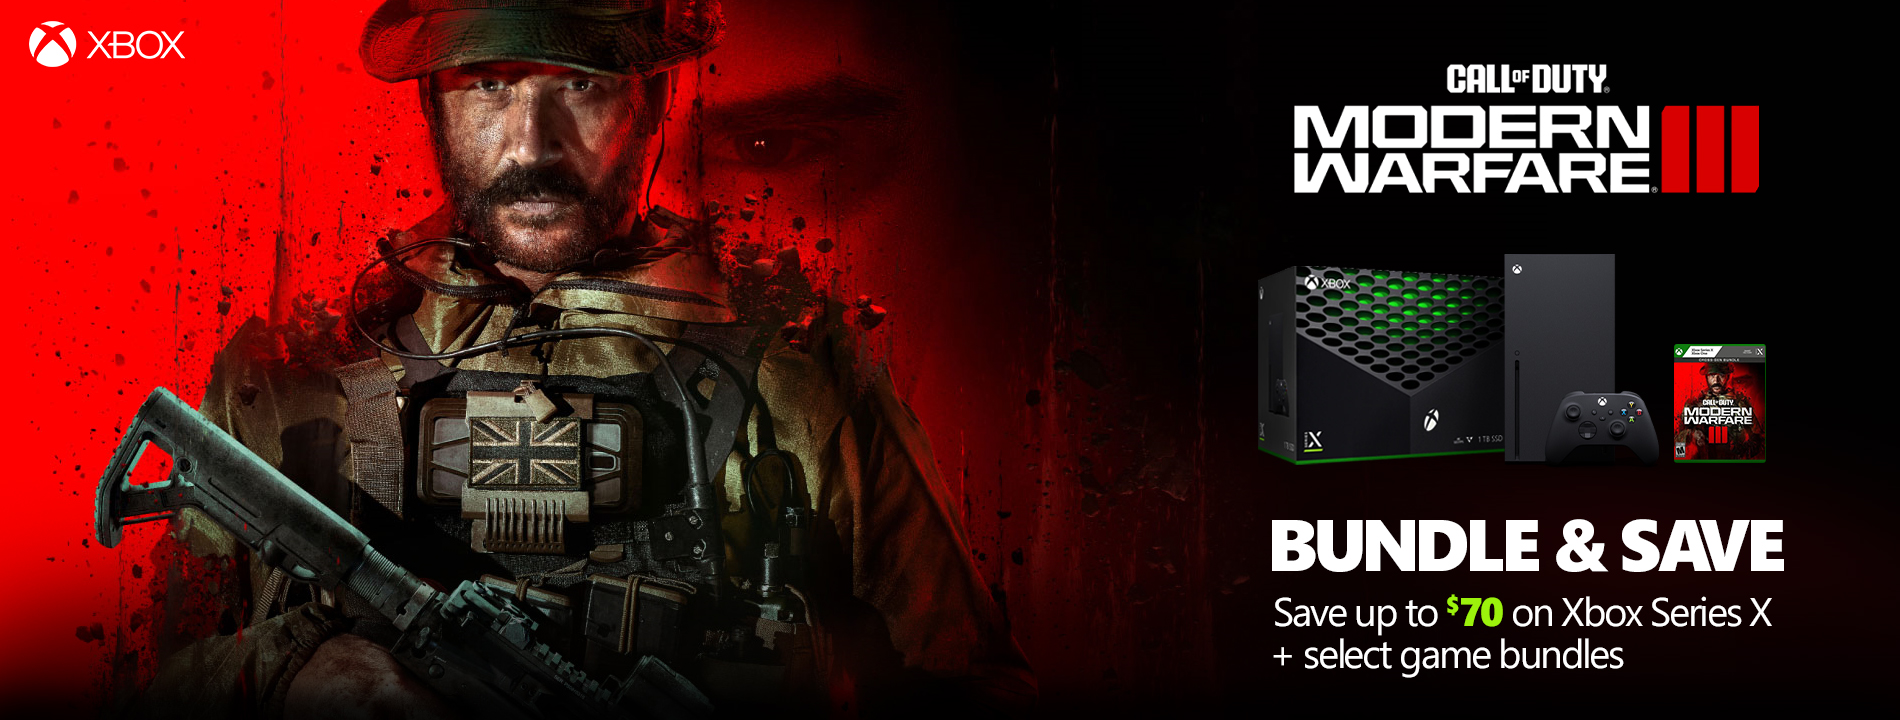 of Warfare Duty Xbox Call Modern Bundles III